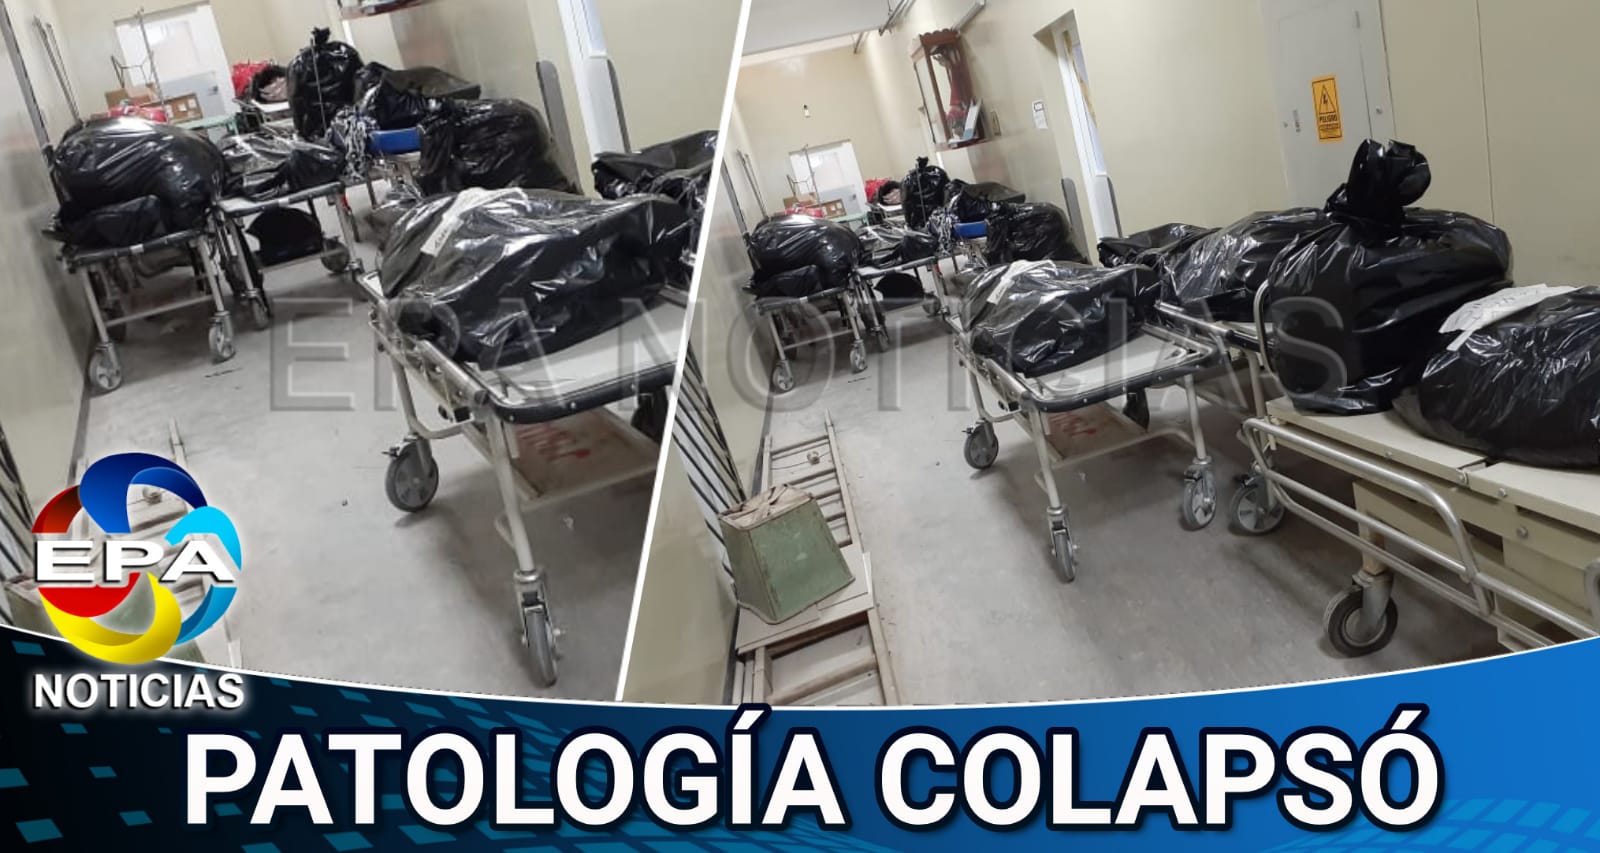 Arequipa. Patología del hospital Covid-19 colapsó.